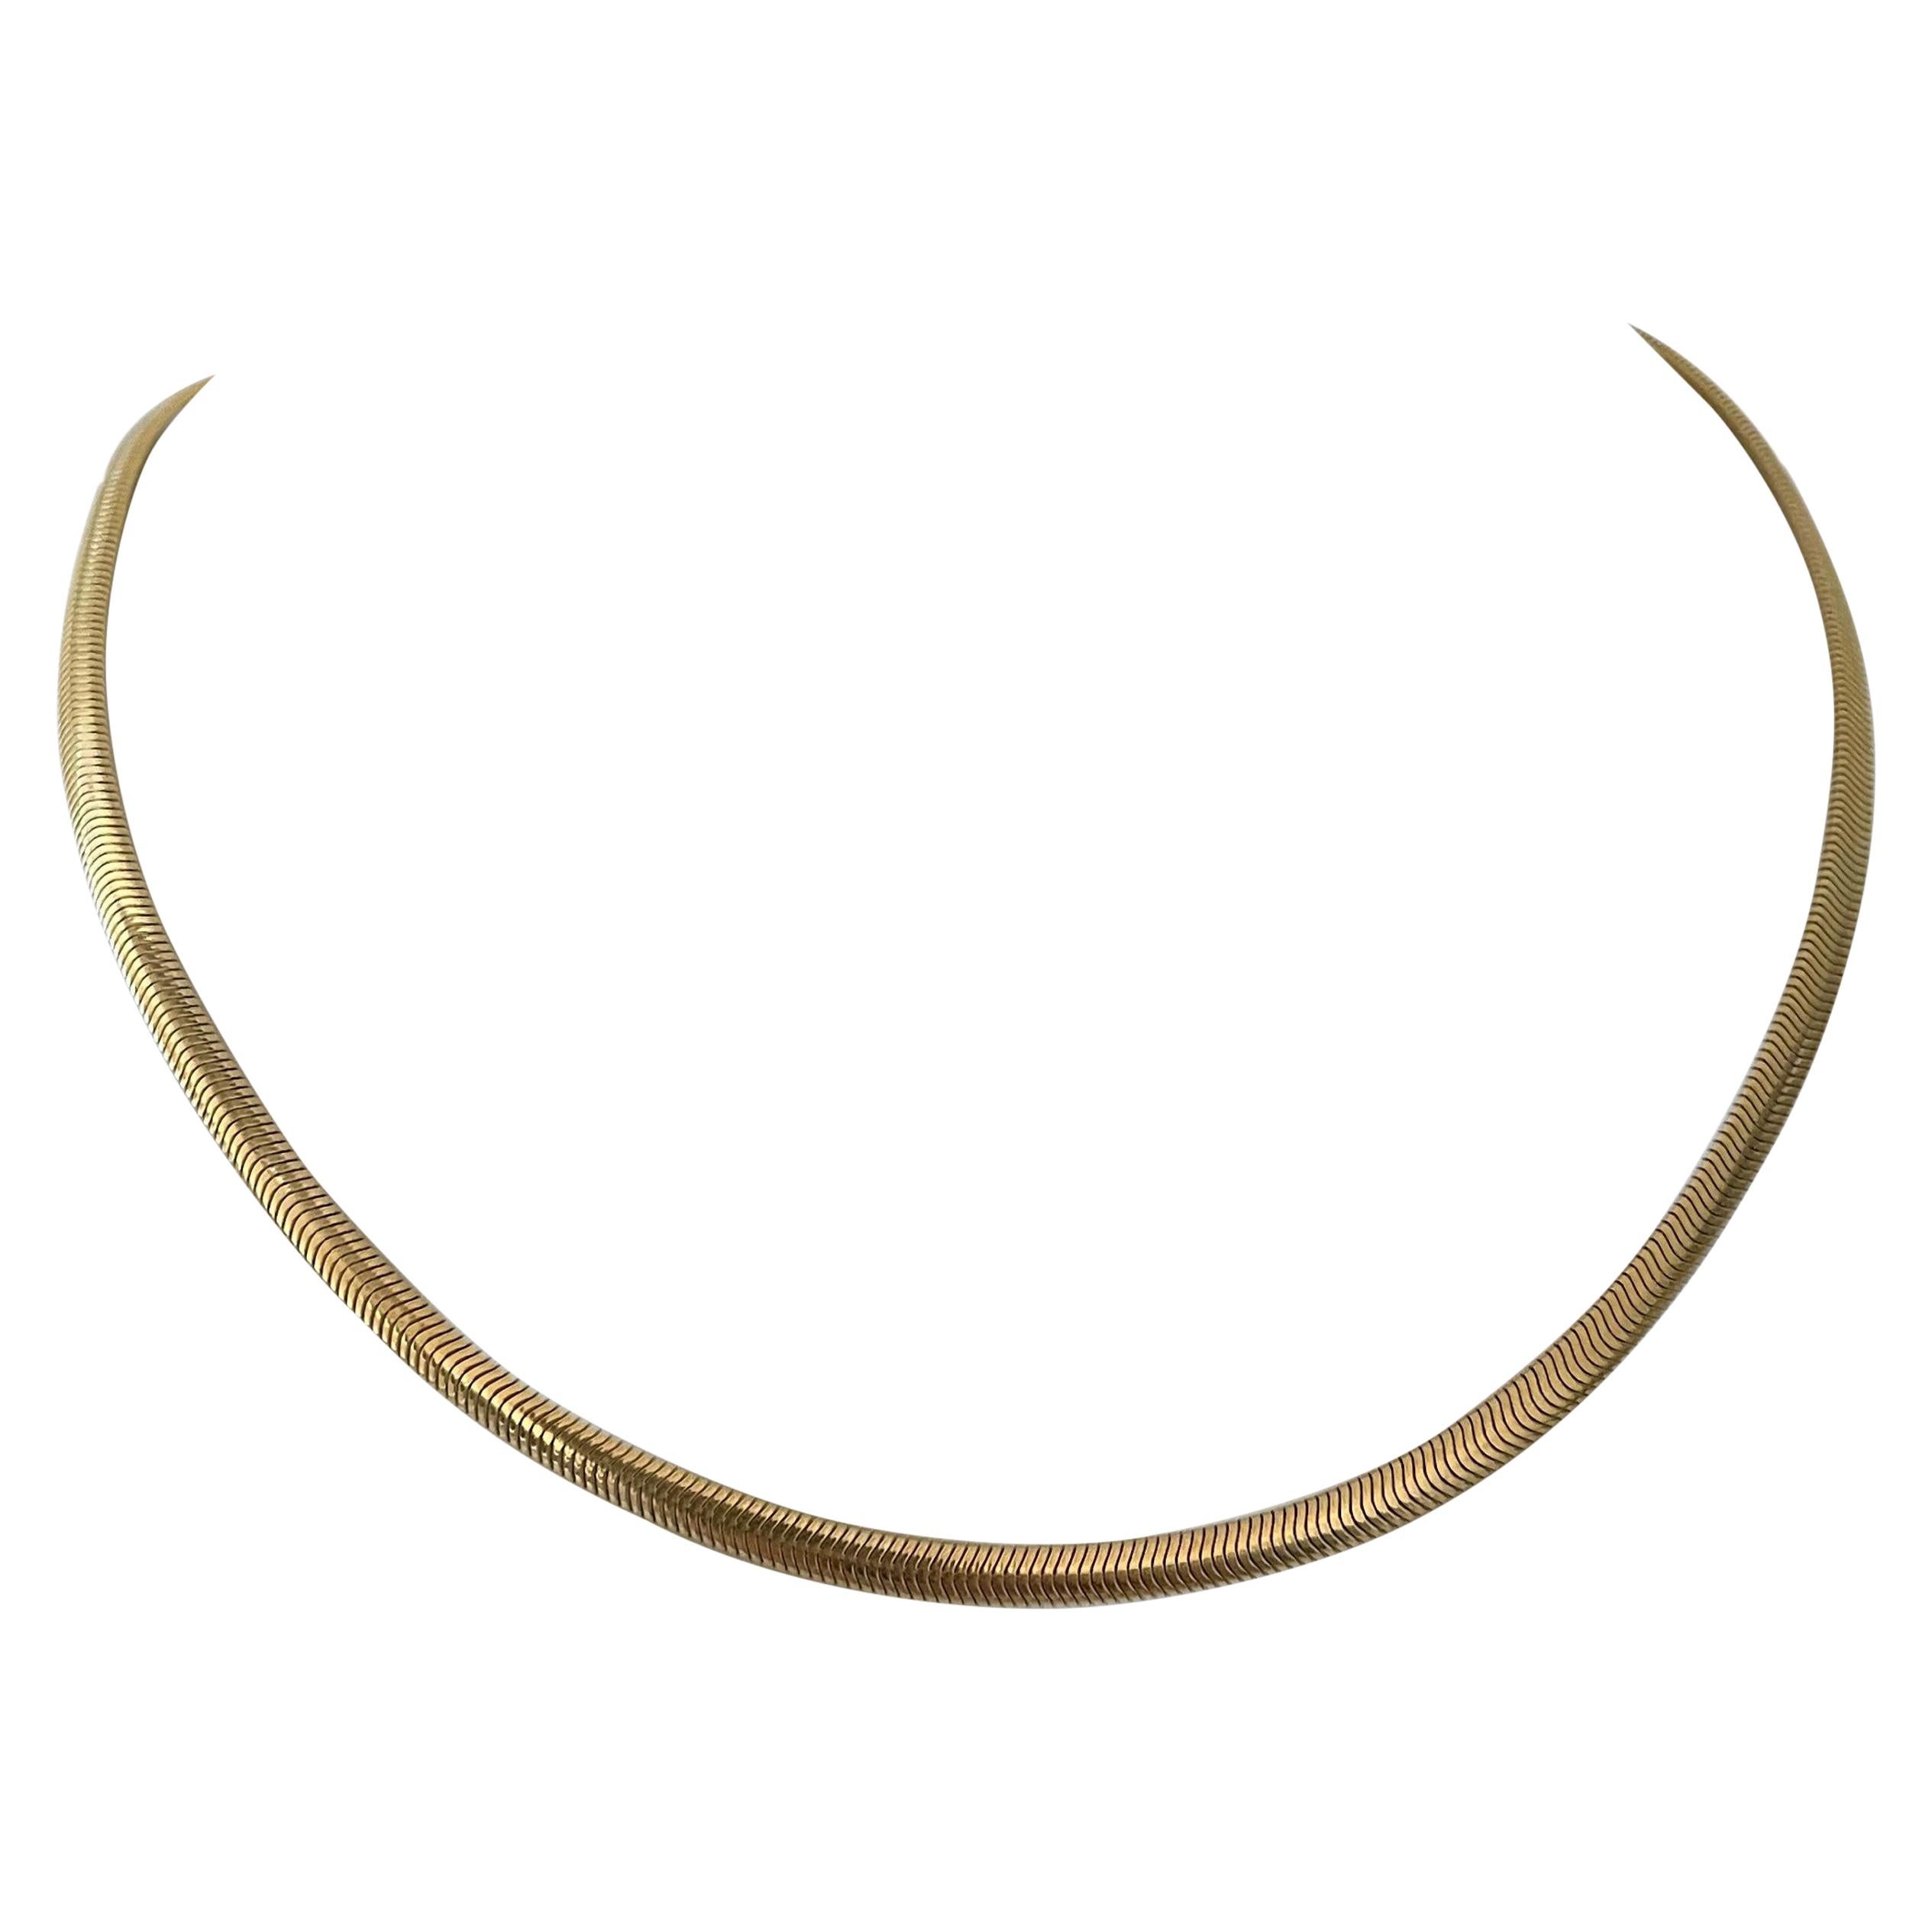 14 Karat Yellow Gold Flat Snake Link Chain Necklace